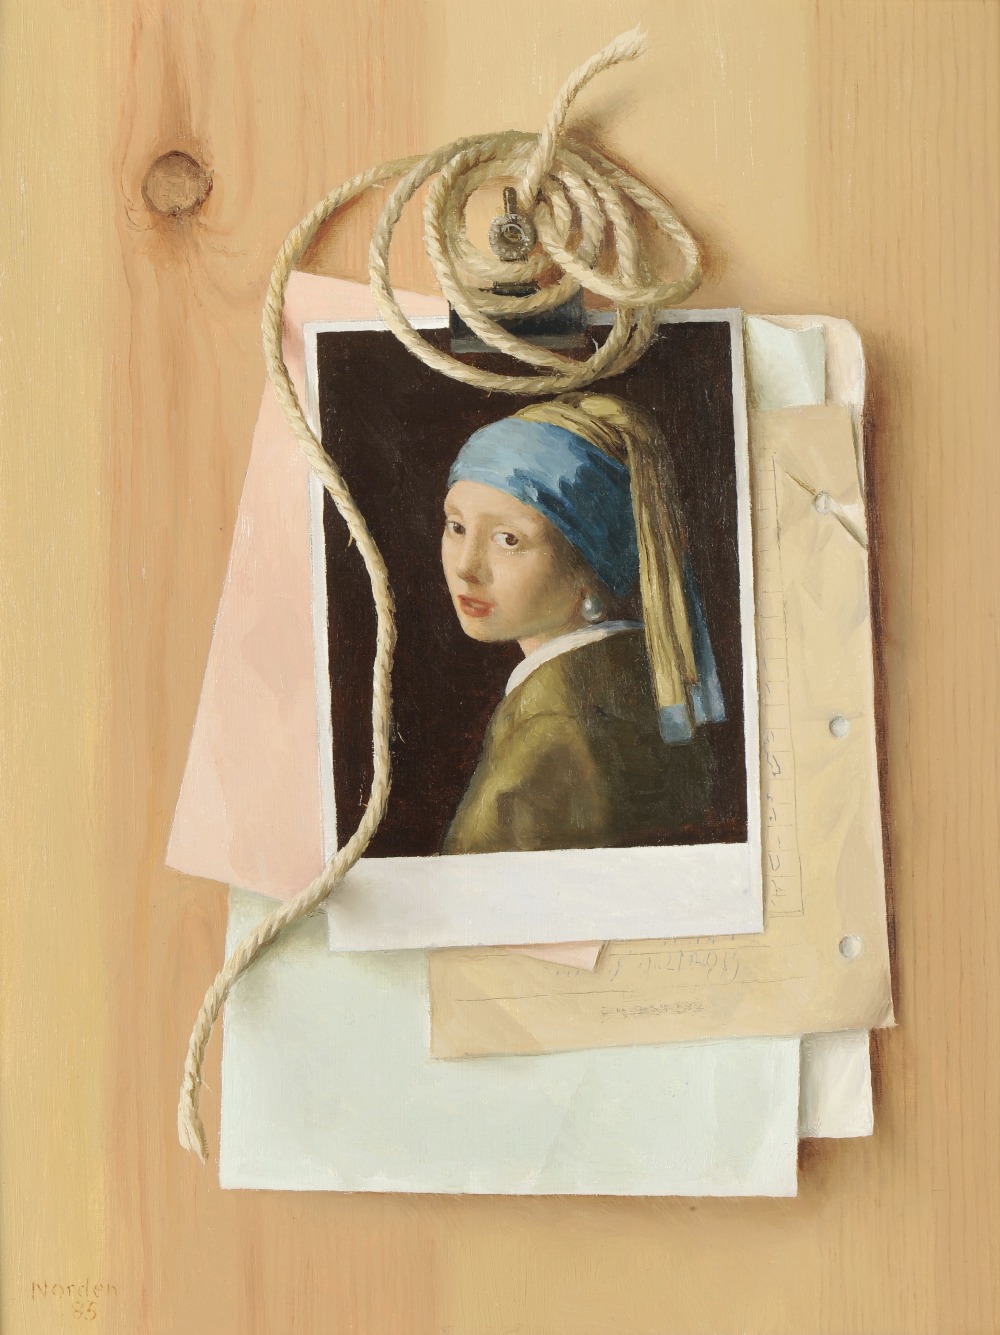 Gerald Norden (1912-2000) 
"Paper Clip" - a trompe d'oeil painting depicting a postcard of Vermeer's